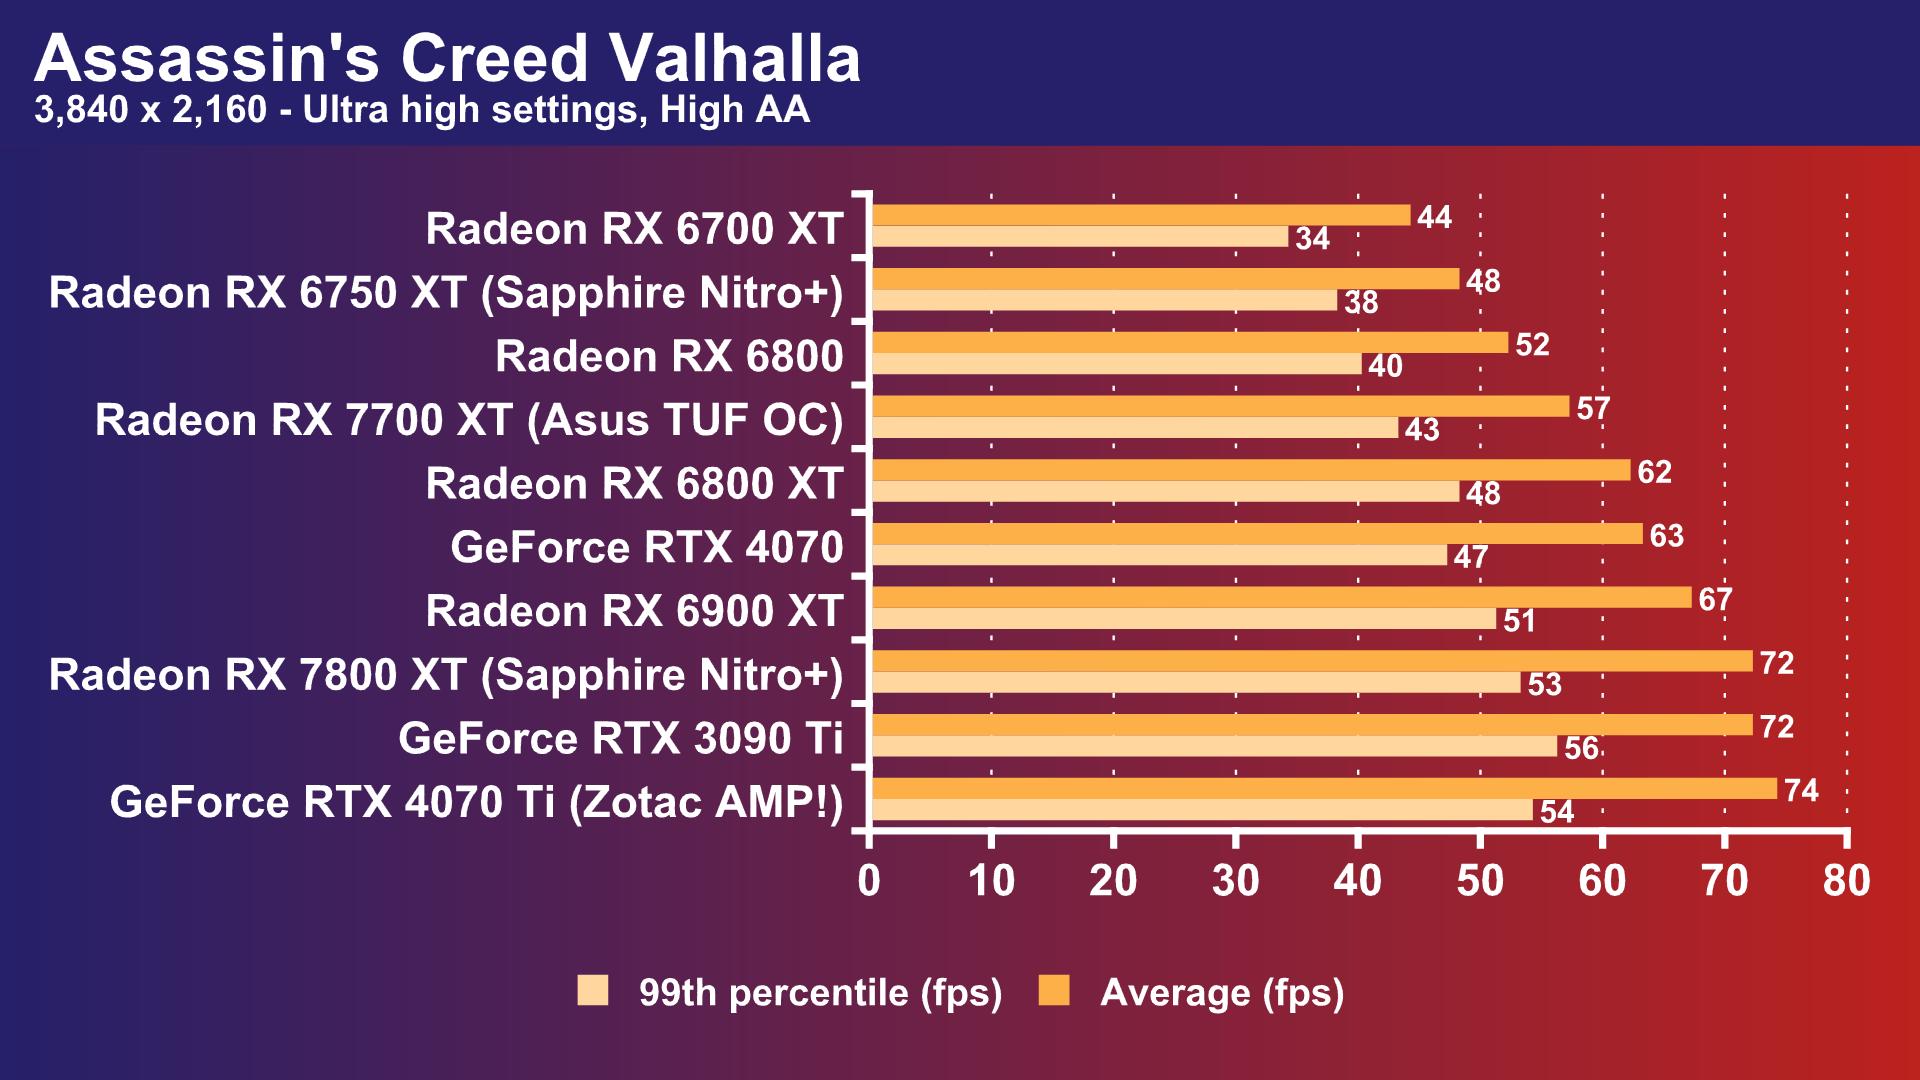 AMD Radeon RX 6750 XT review